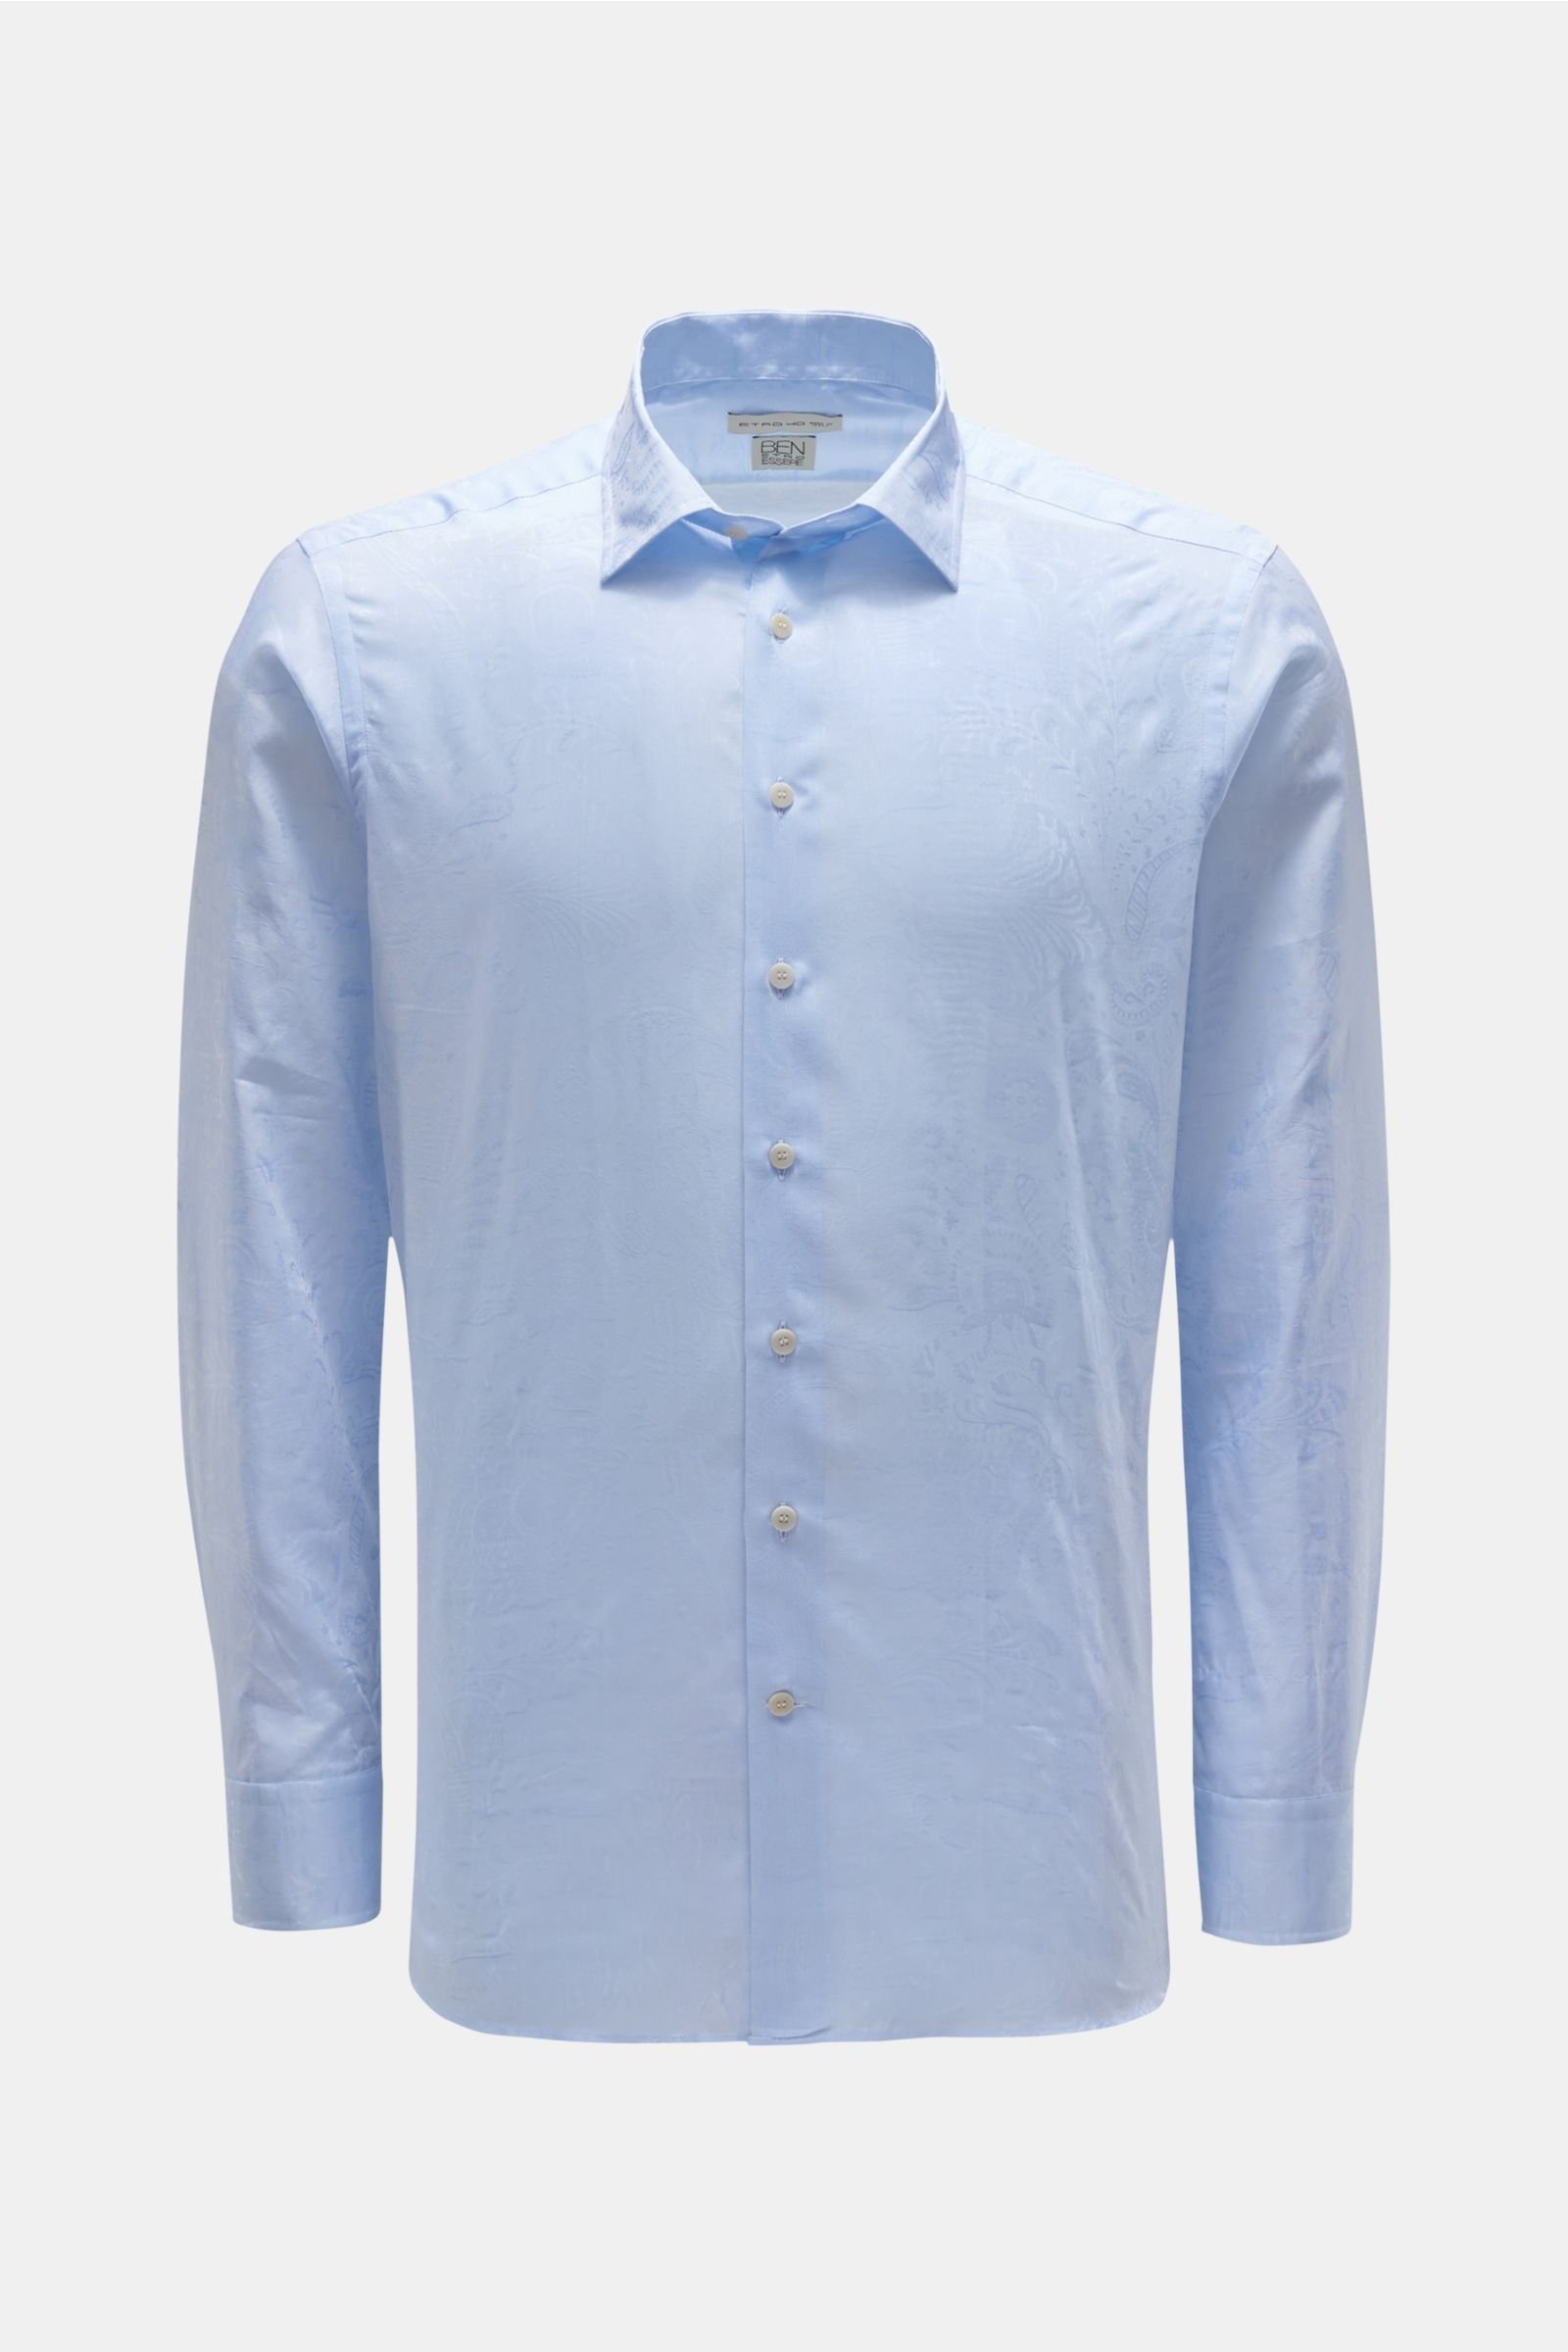 Jacquard shirt slim collar pastel blue patterned